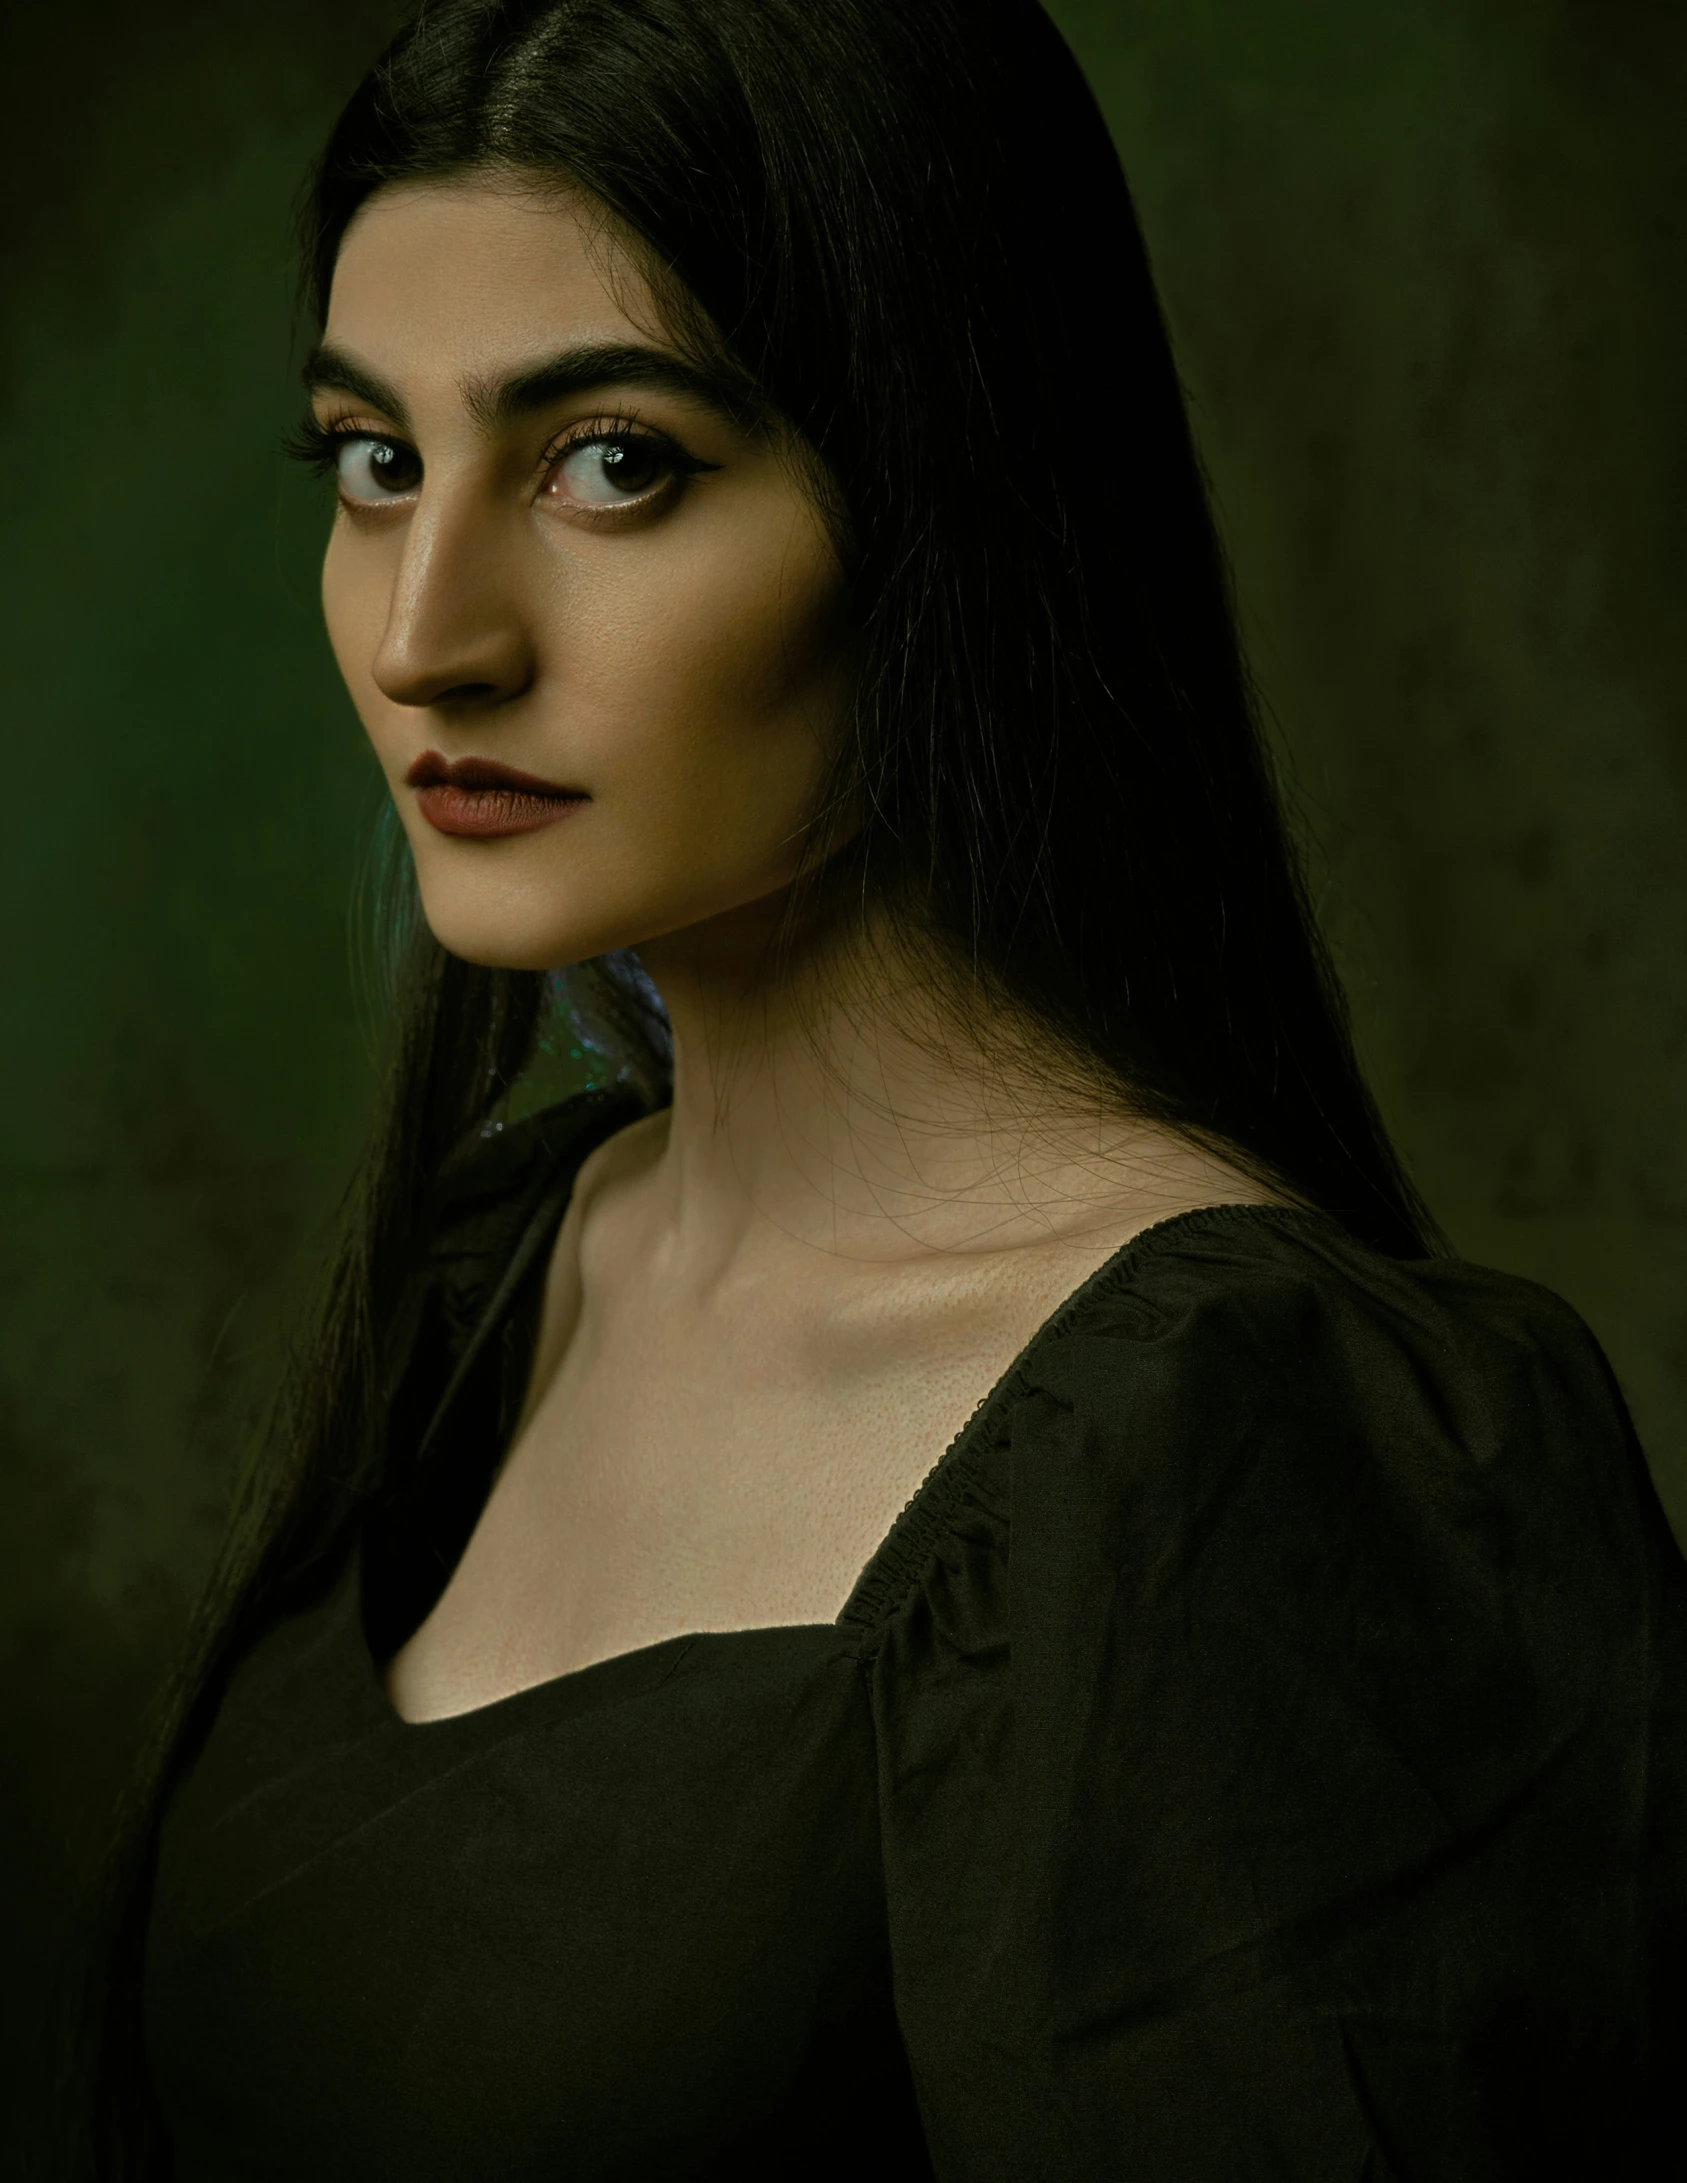 a woman posing for a portrait wearing a black shirt